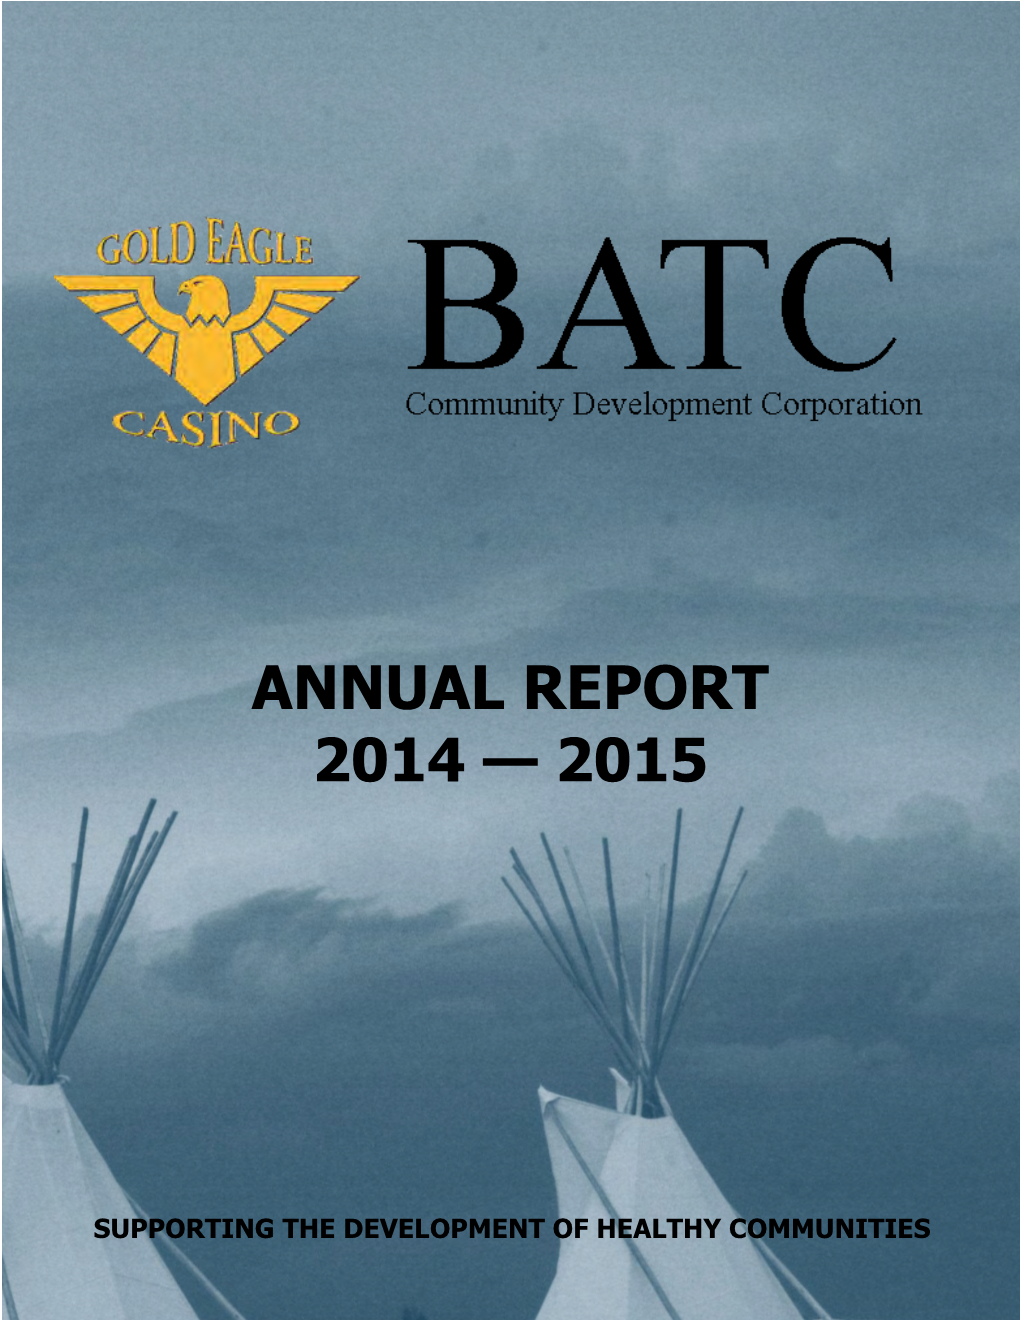 BATC CDC Annual Report 2014-2015